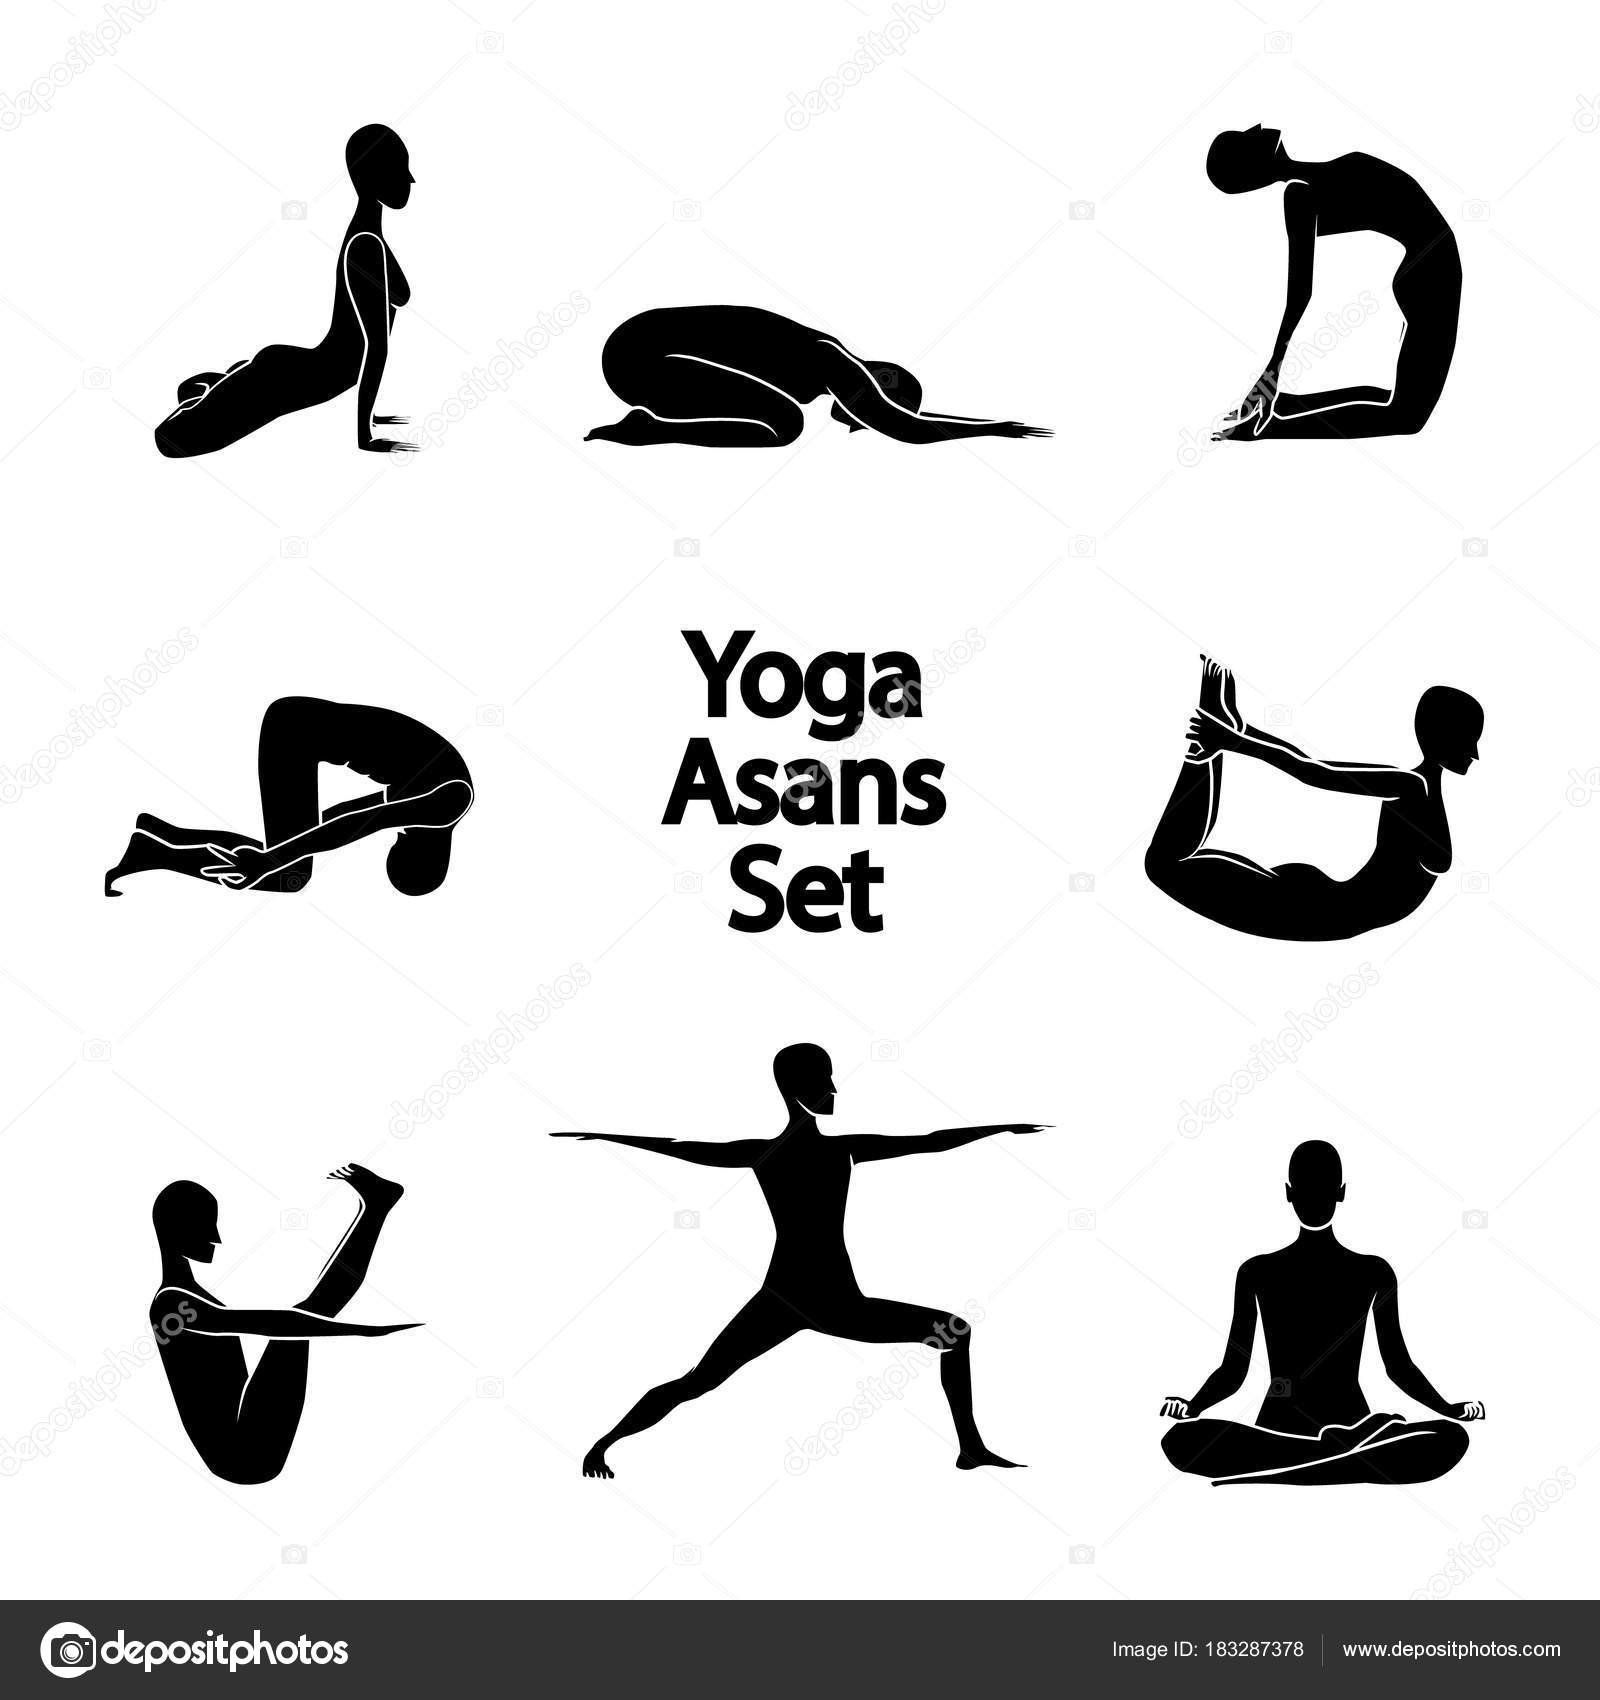 8 Yin Yoga Poses to Achieve Deep Relaxation | NewsTrack English 1